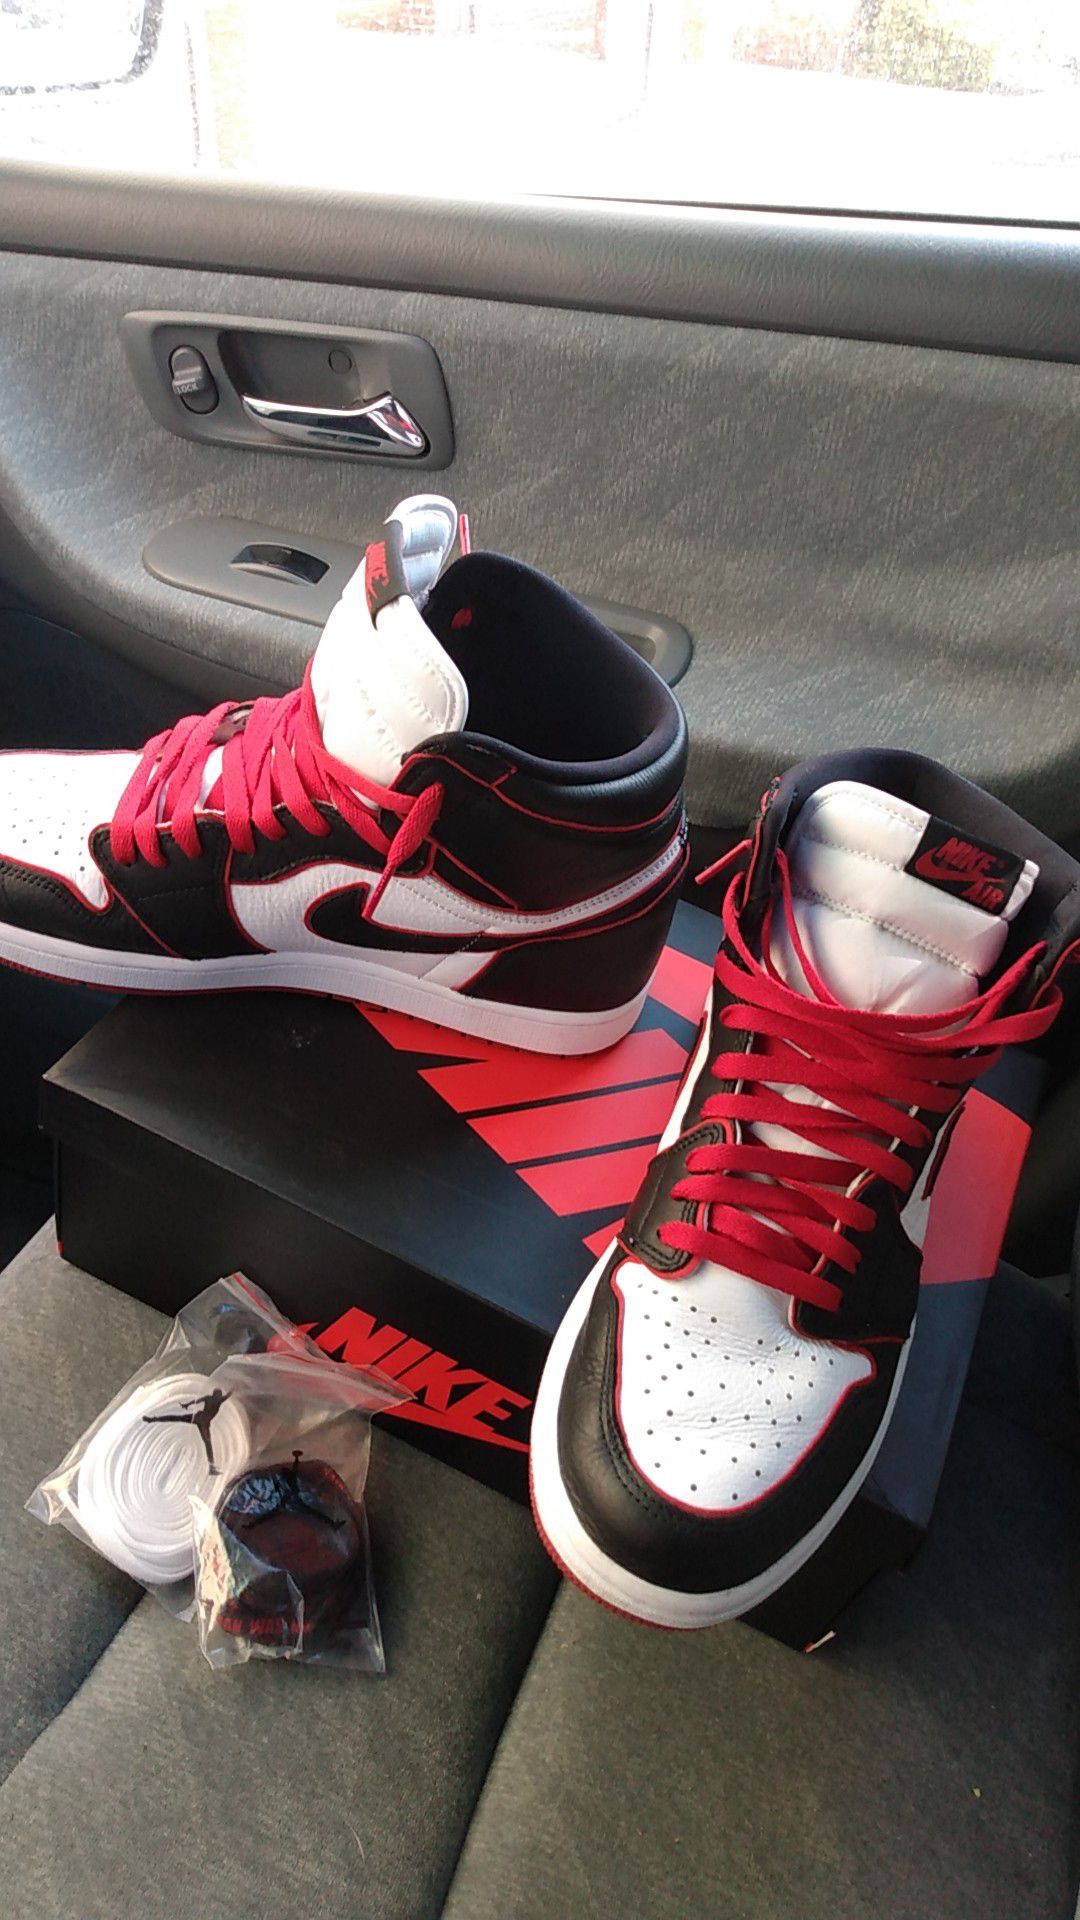 Nike Air Jordan 1s bloodline size 12